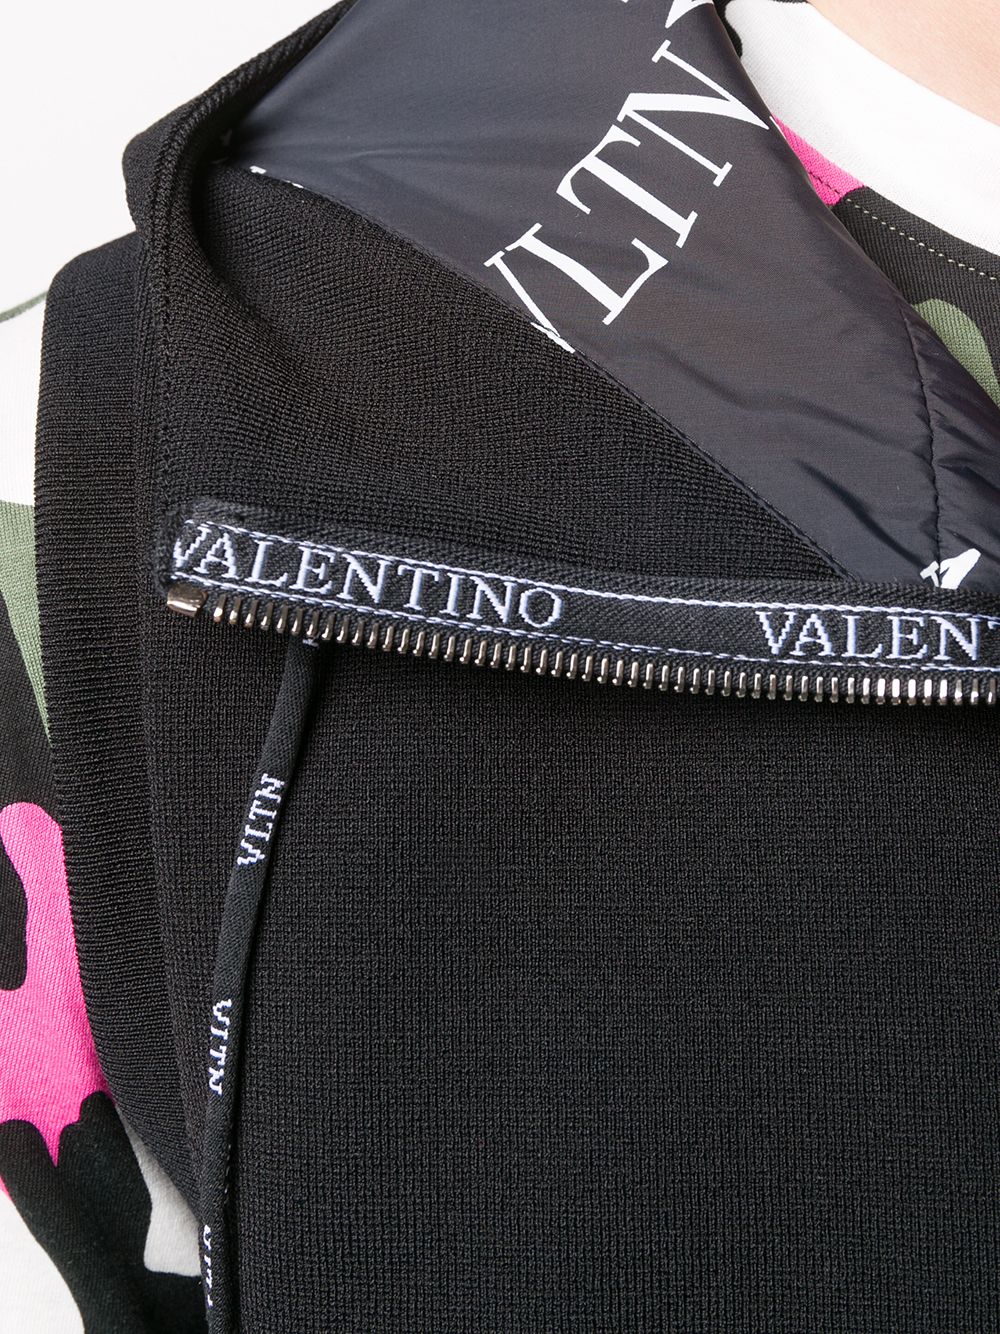 фото Valentino жилет с капюшоном и логотипом vltn